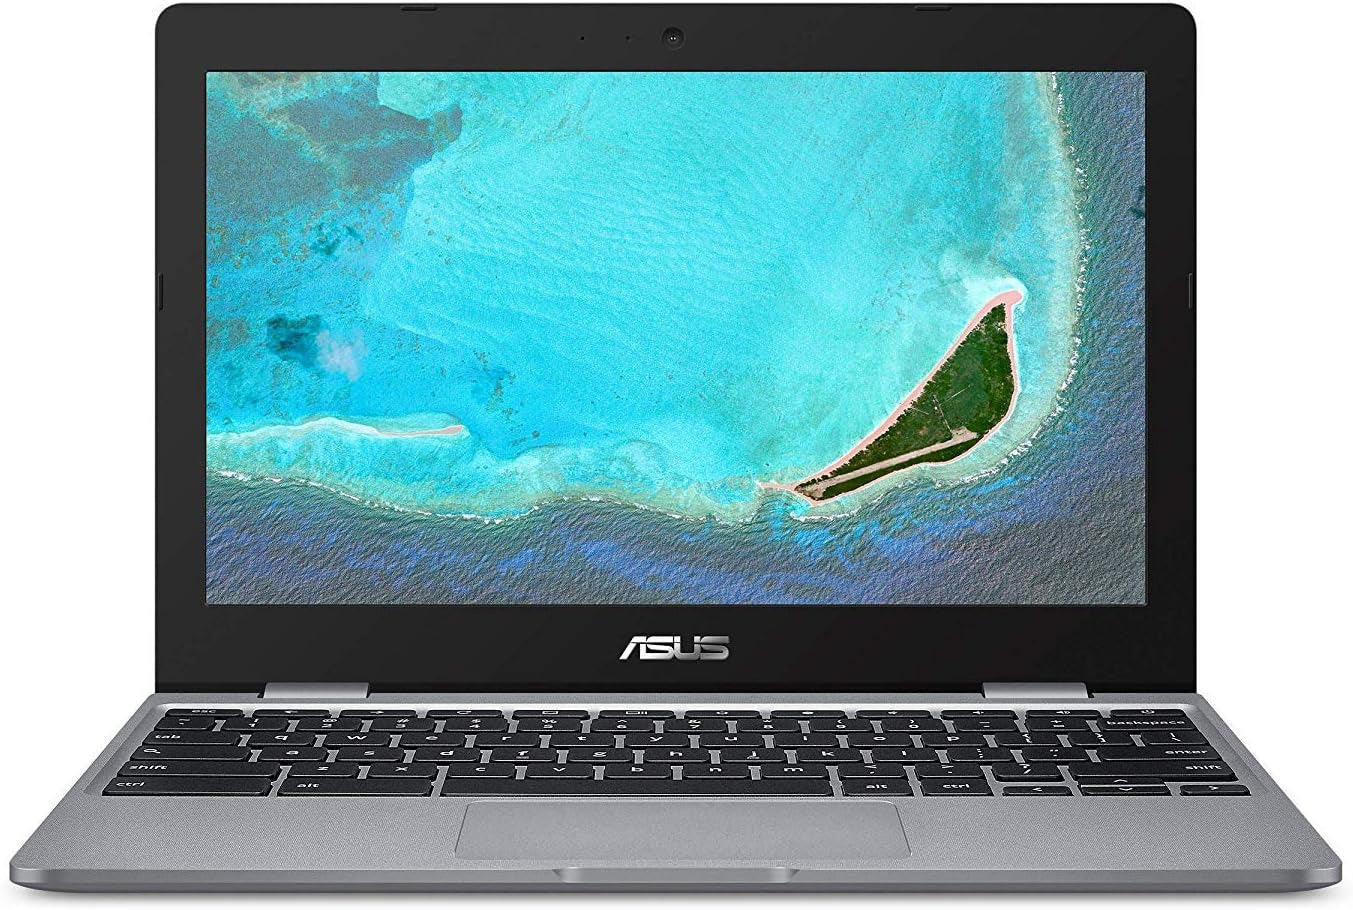 ASUS Chromebook C223 11.6" HD Chromebook Laptop, Intel Dual-Core Celeron N3350 Processor (up to 2.4GHz), 4GB RAM, 32GB eMMC Storage